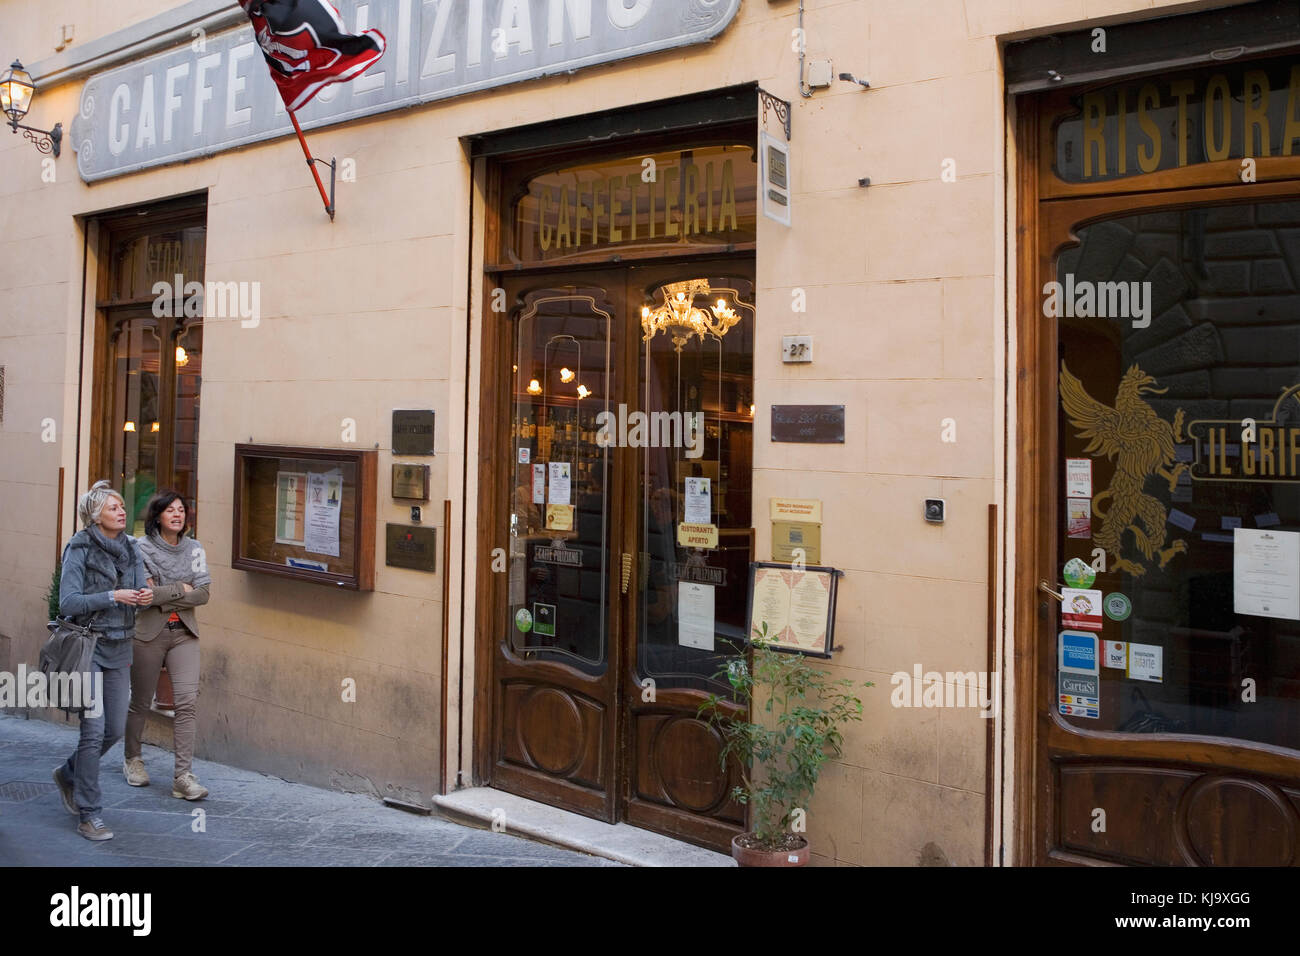 Le Caffé Poliziano, Via di Voltaia nel corso, Montepulciano, Toscane, Italie : célèbre café art nouveau Banque D'Images